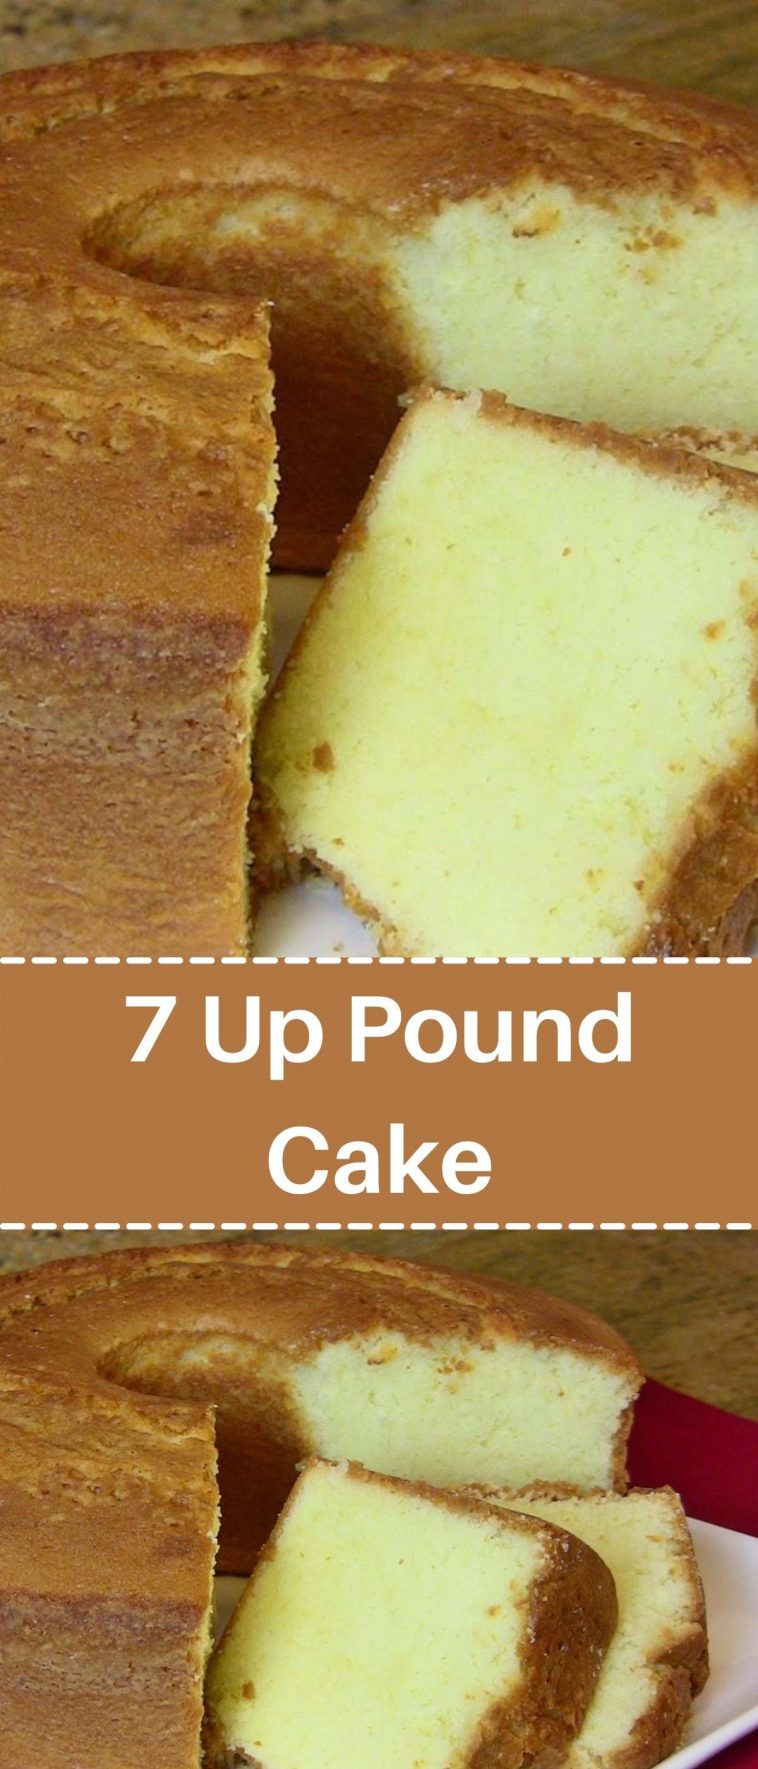 7 Up Pound Cake